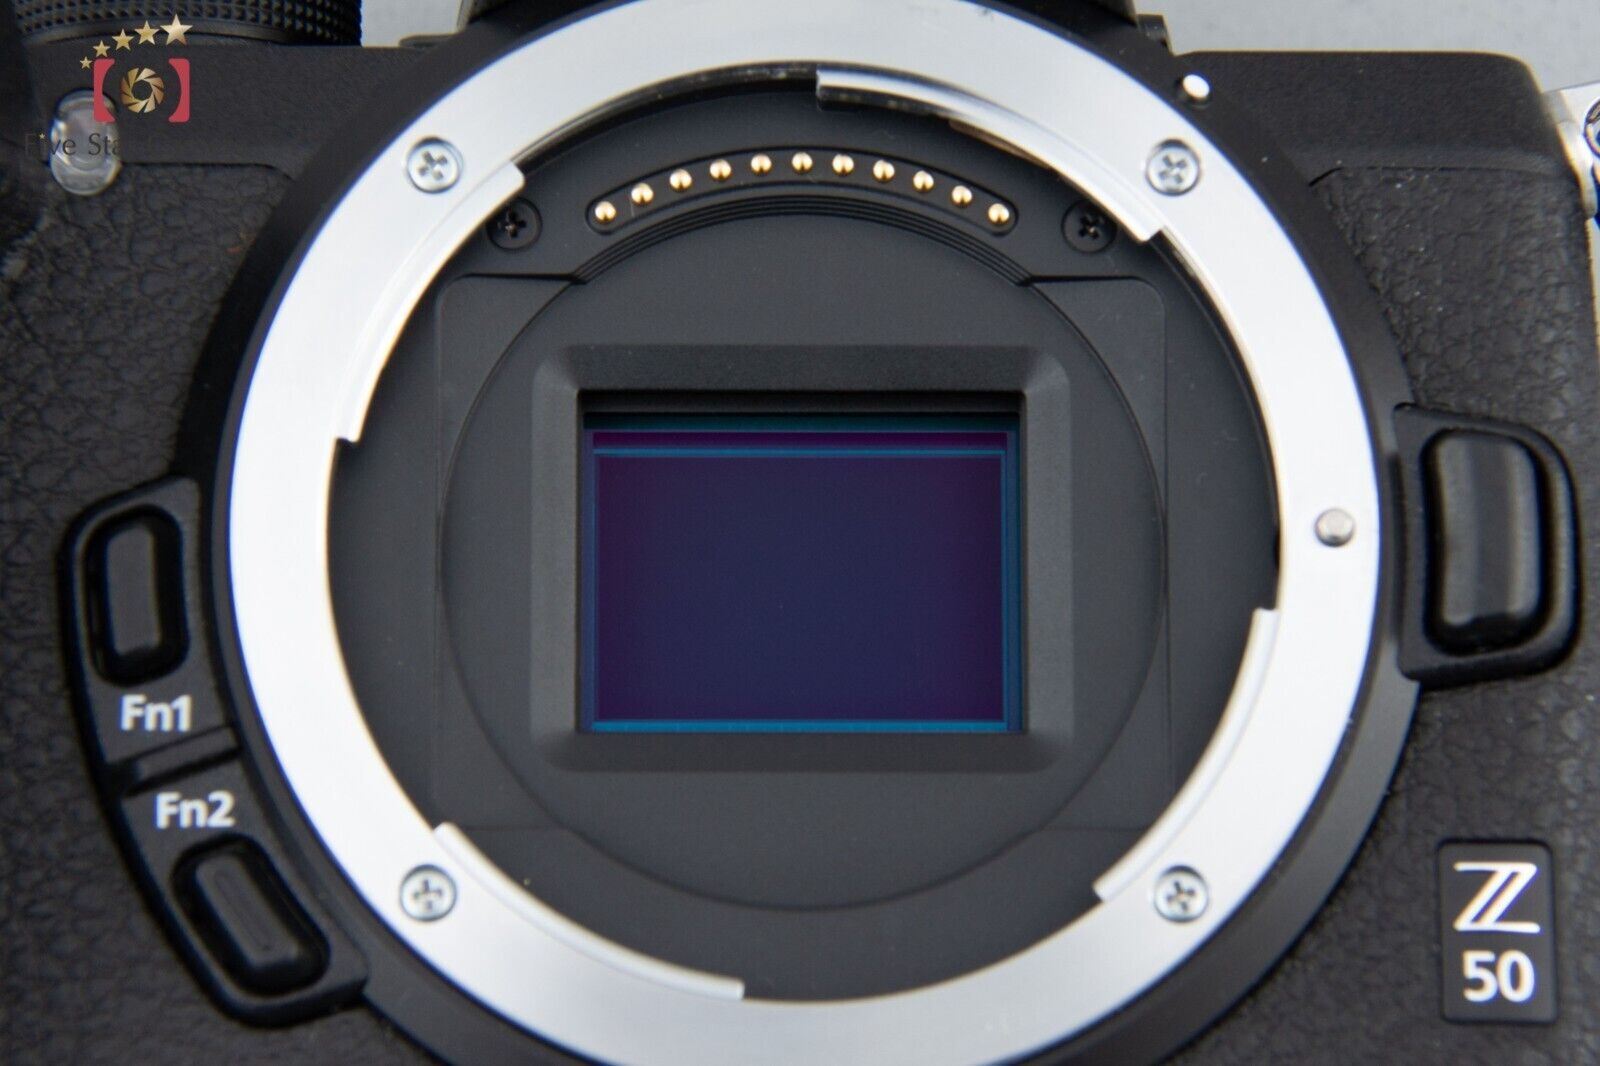 "Shutter count 1,380" Nikon Z50 20.9 MP Digital Mirrorless Camera Body